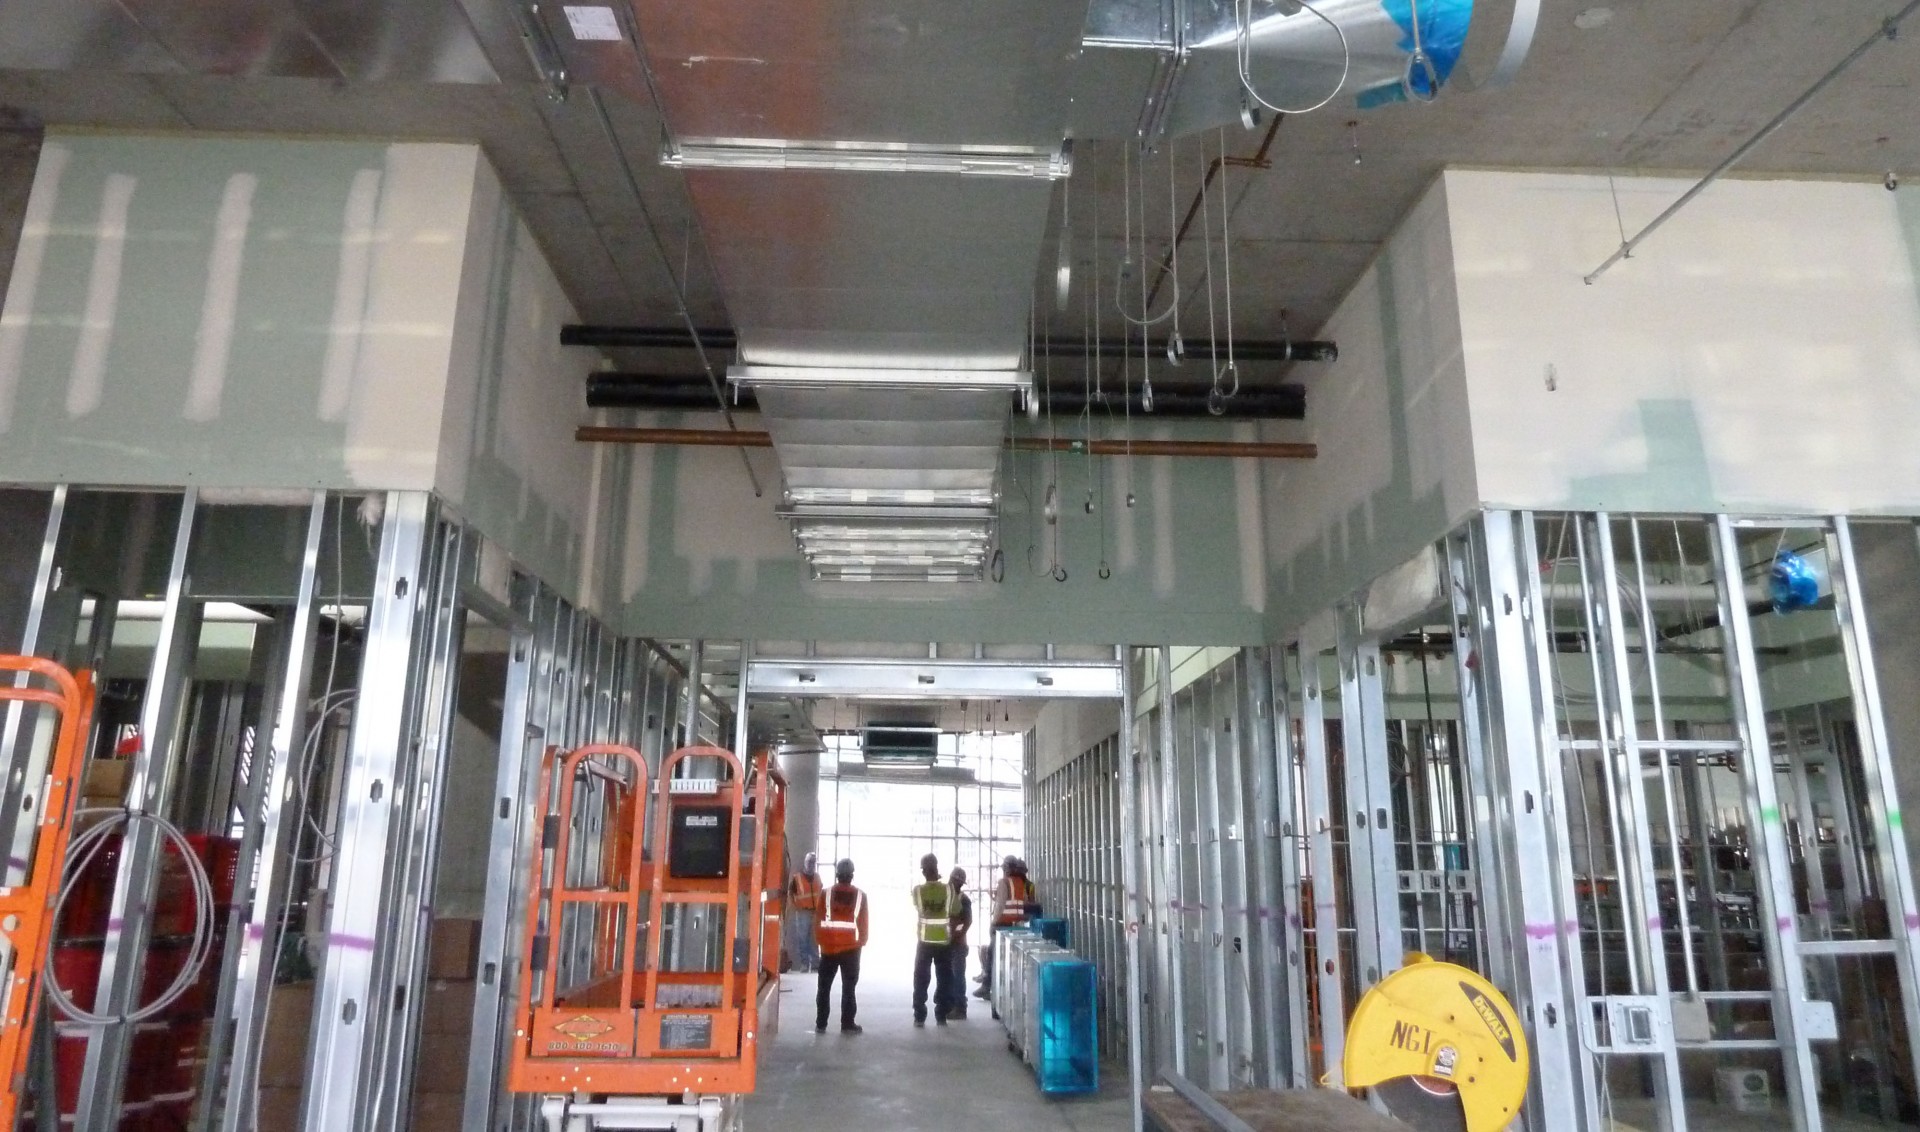 people in orange vests, metal beams visible in interior of building under construction